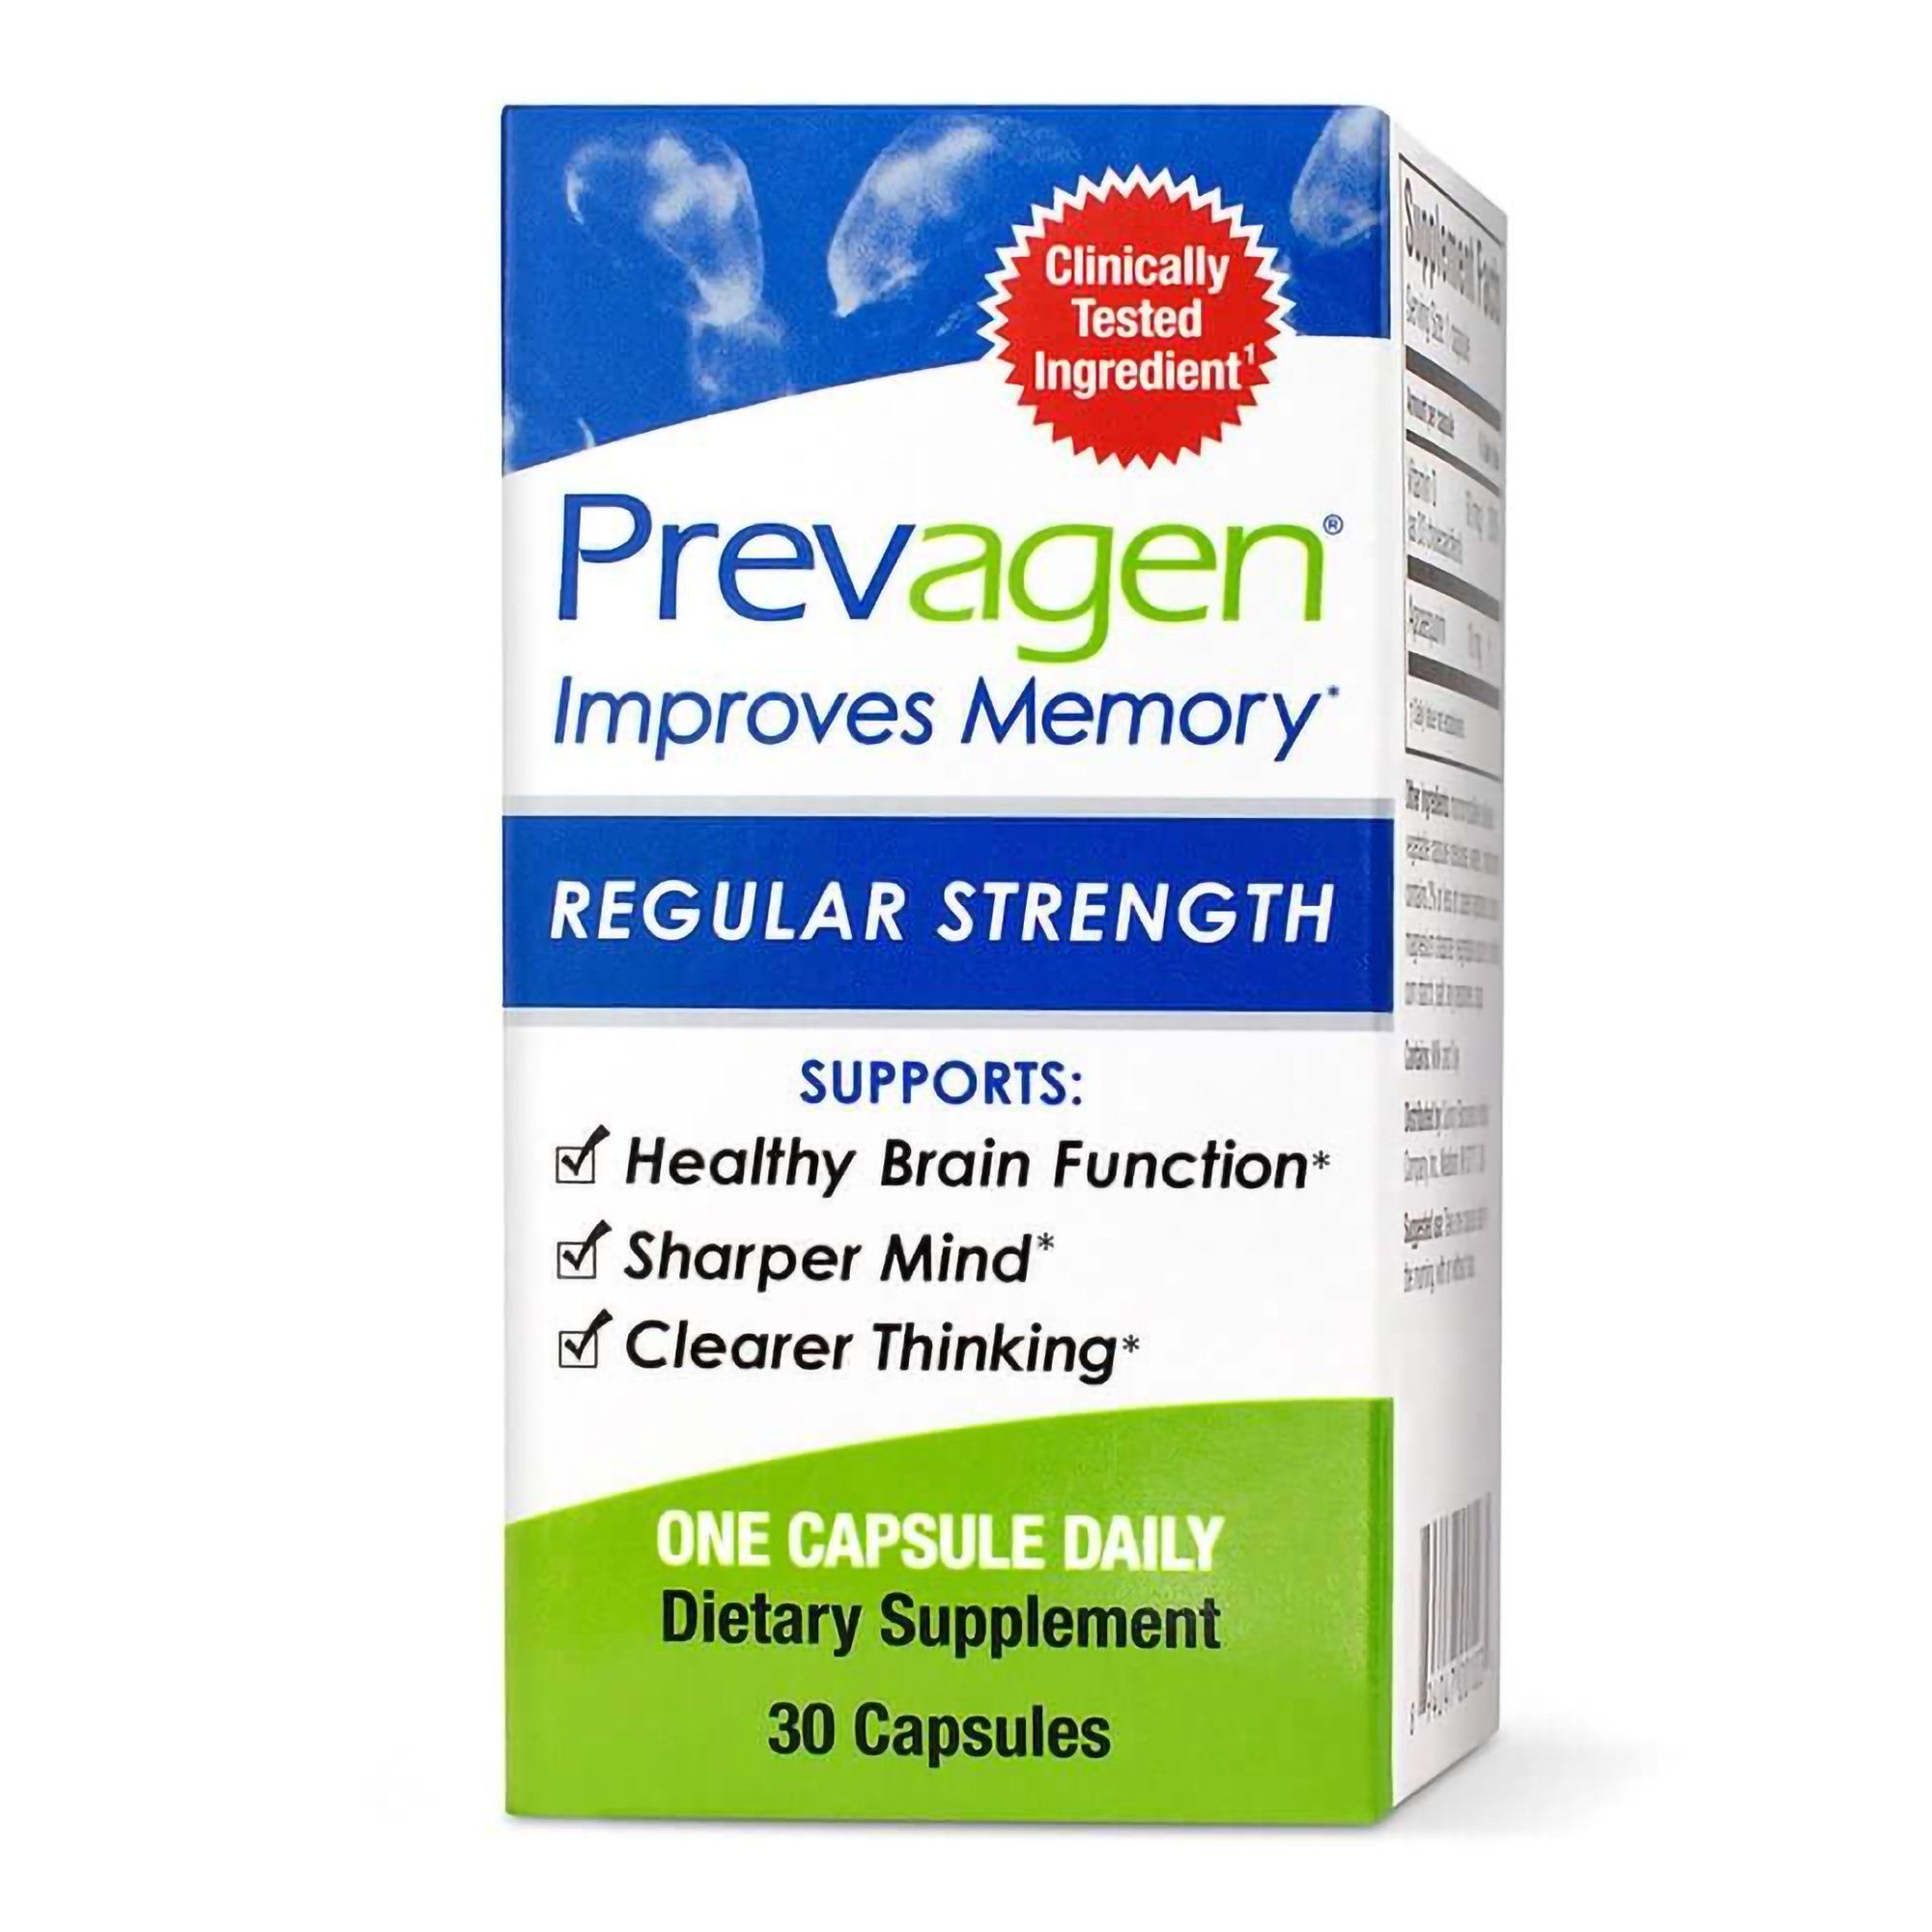 Prevagen Improves Memory Tablets, Regular Strength - 30 ct